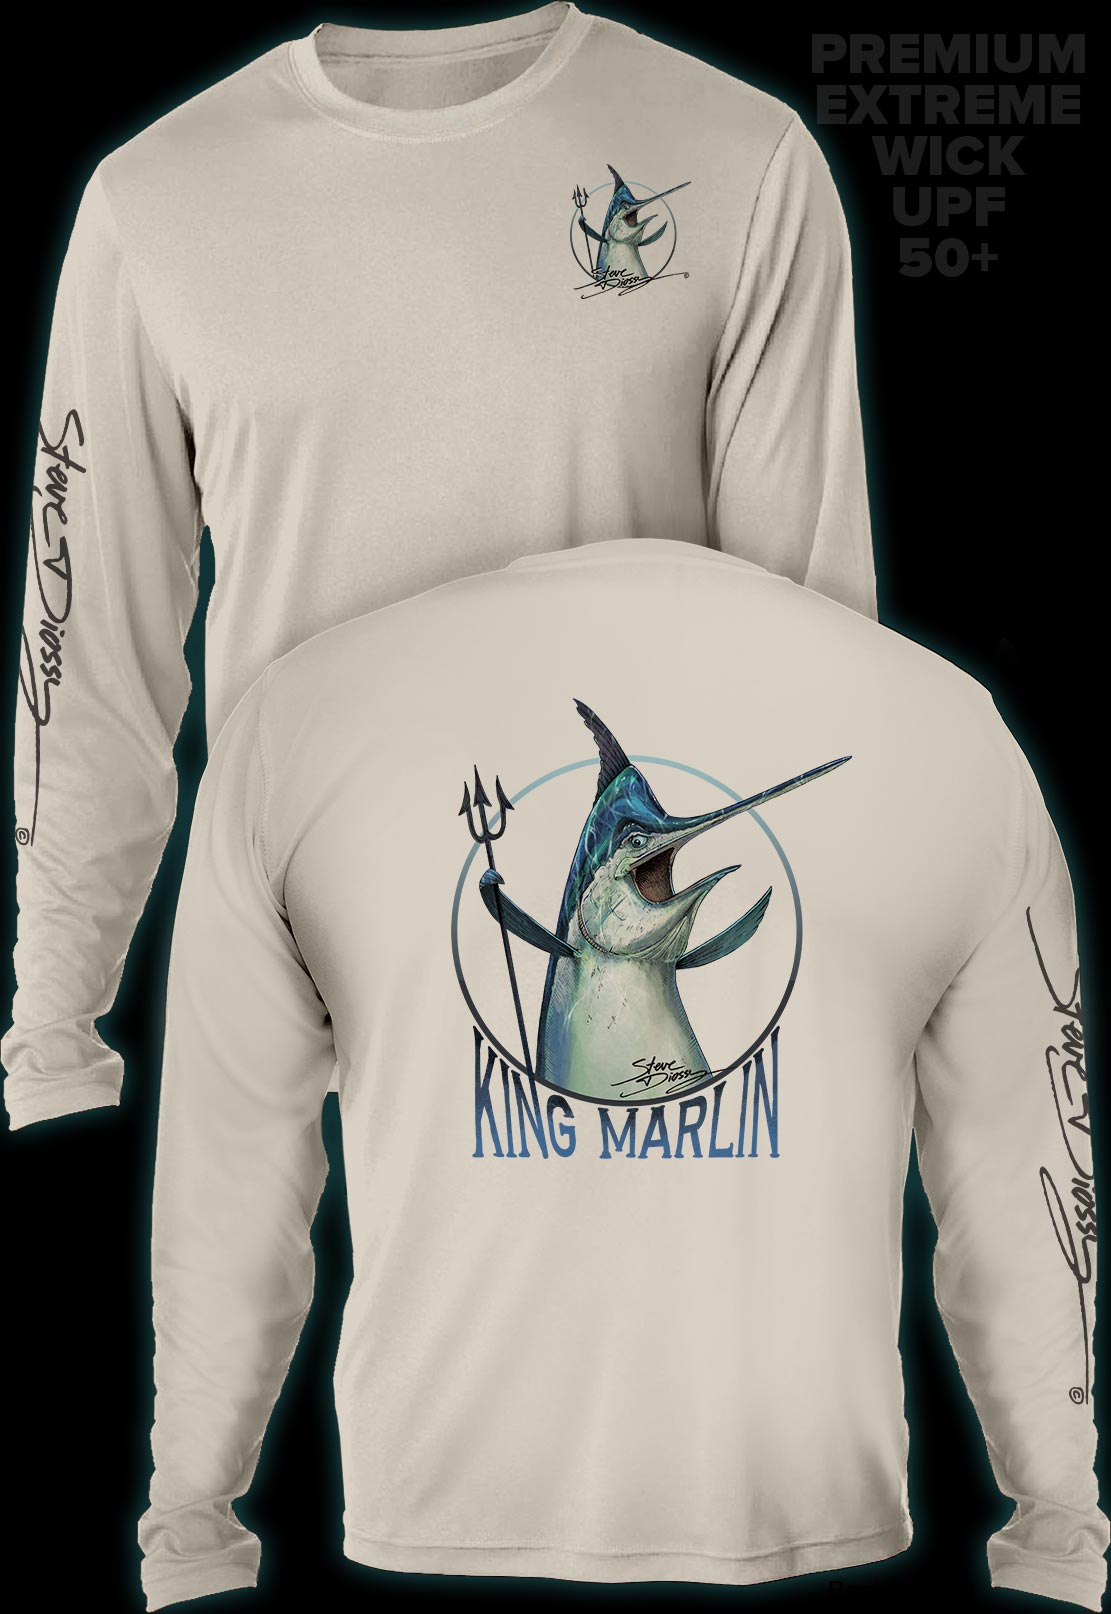 "King Marlin" Men's Extreme Wick Long Sleeve Performance Shirt ᴜᴘꜰ-ᴛᴇᴇ